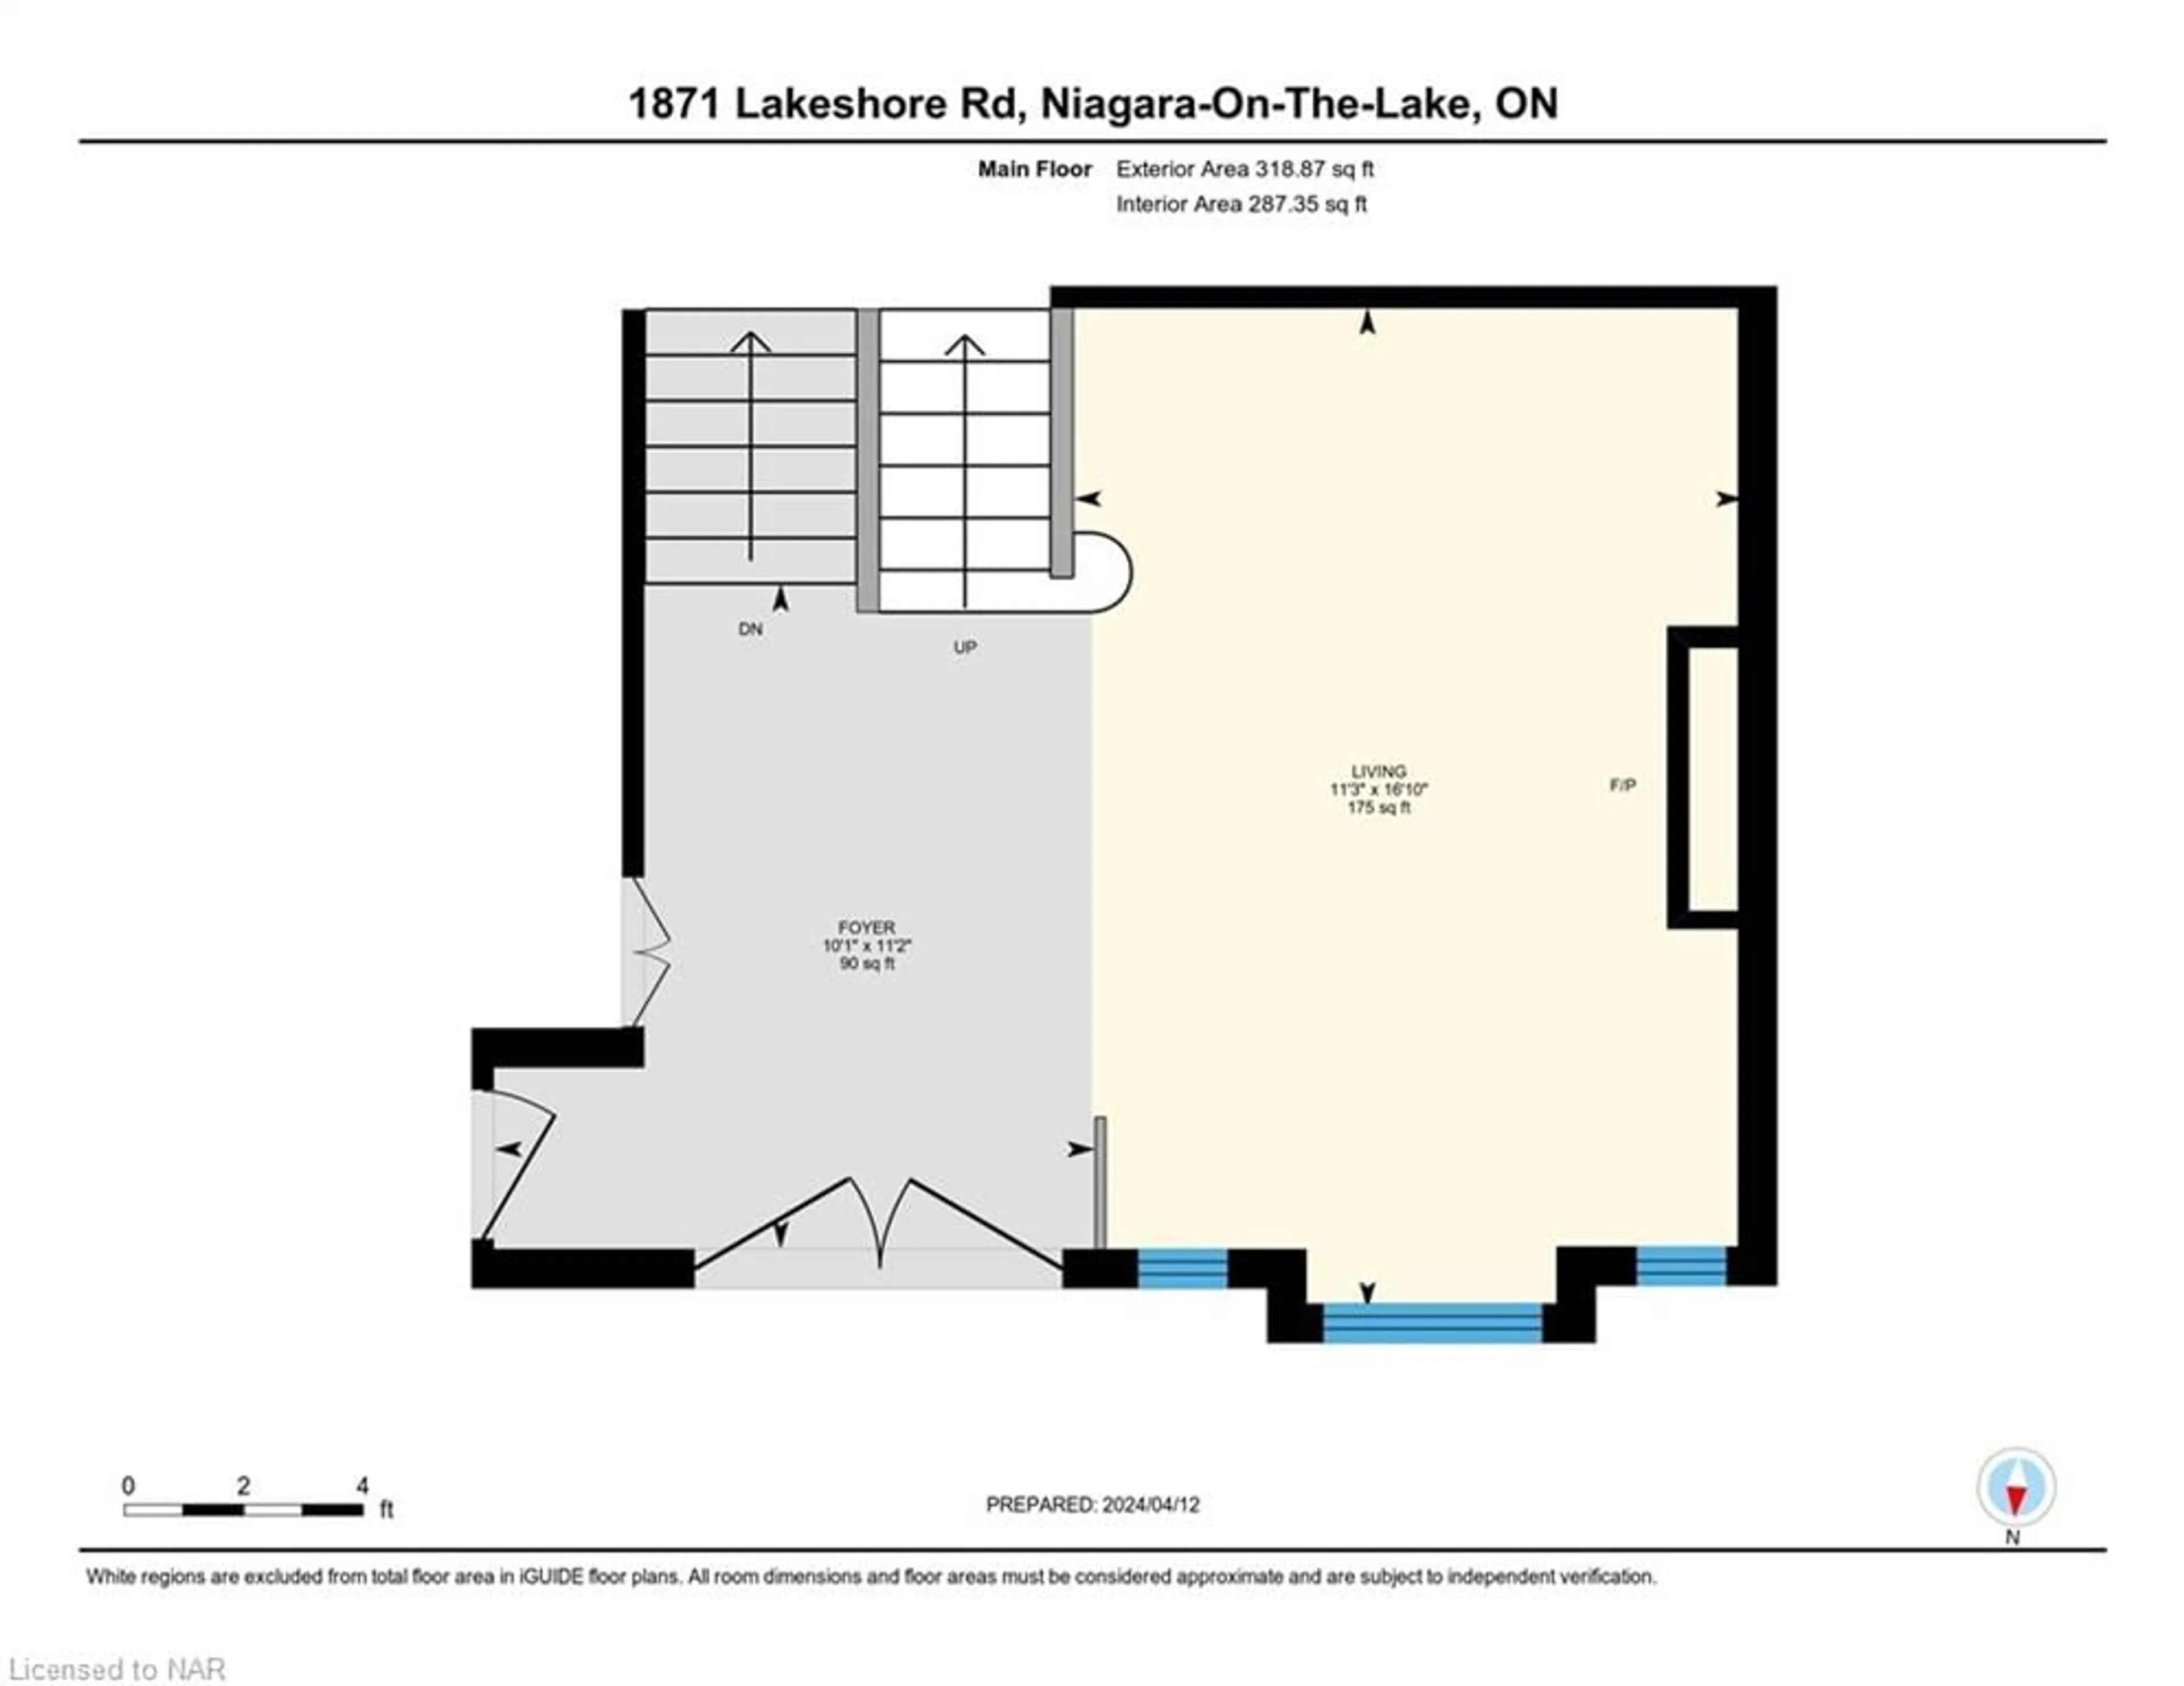 Floor plan for 1871 Lakeshore Rd, Niagara-on-the-Lake Ontario L0S 1J0